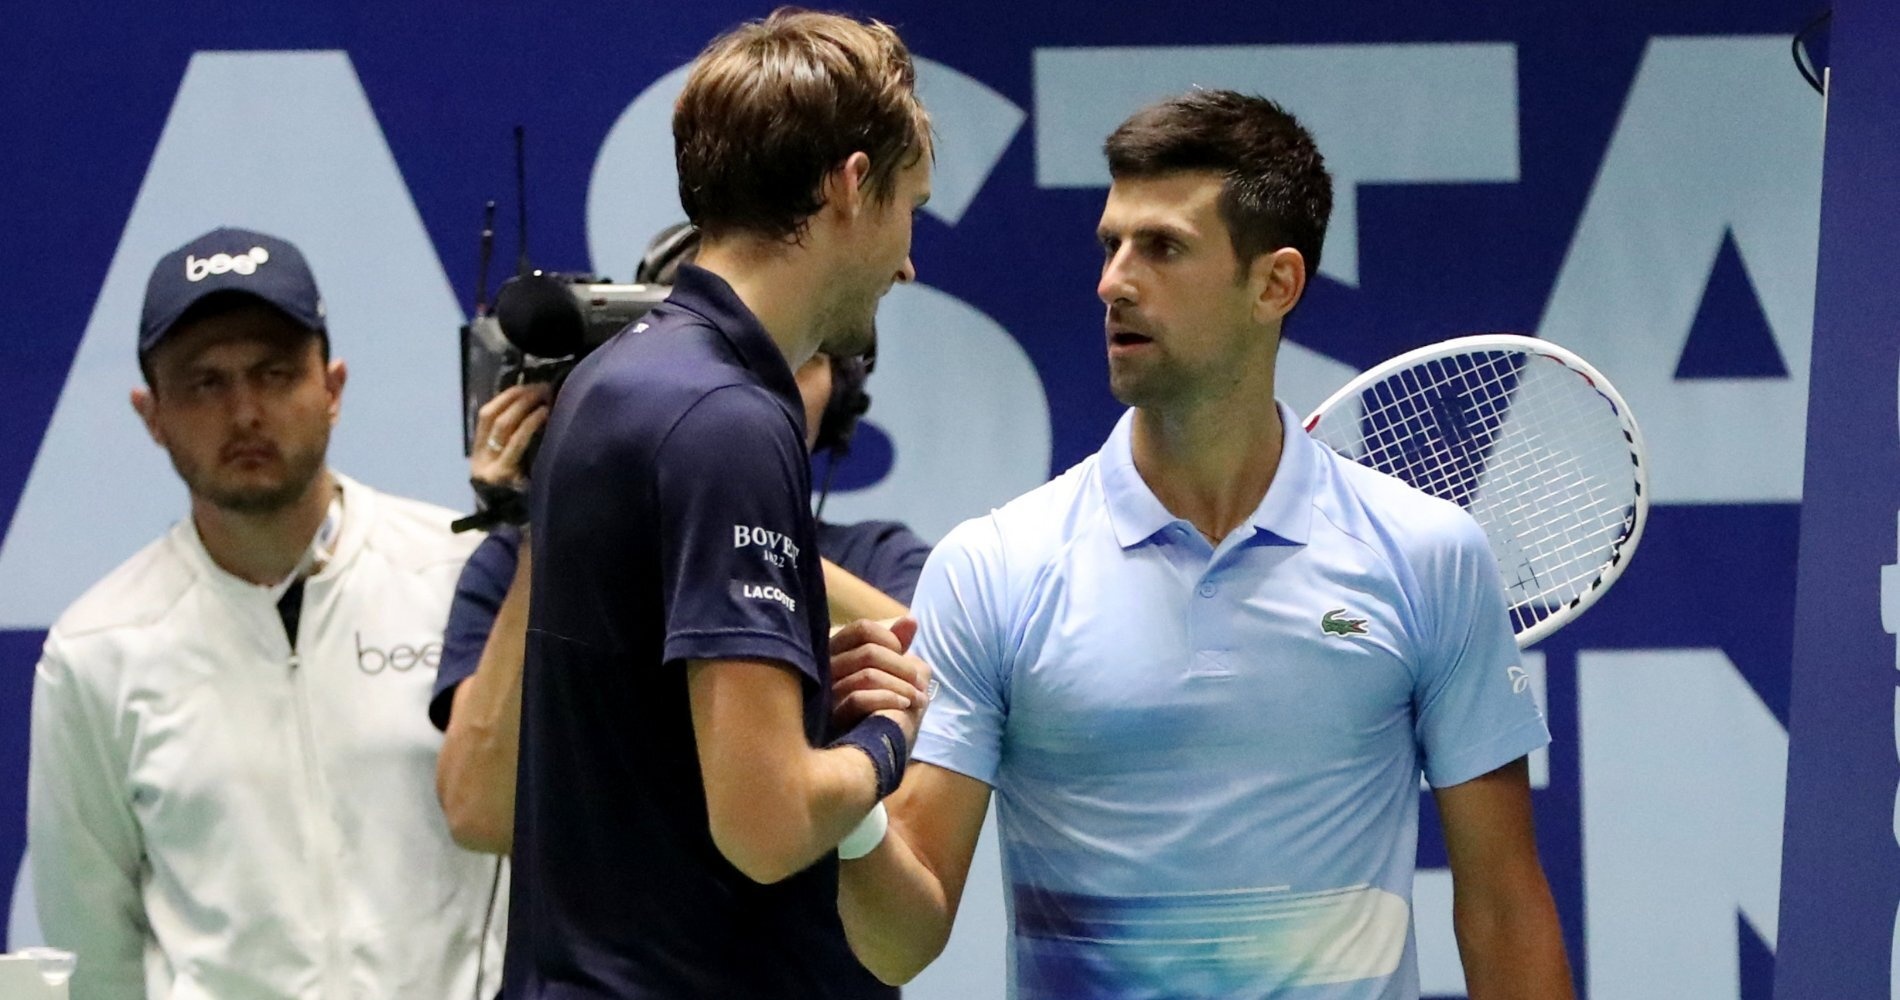 Tennis, ATP Astana Open 2022 Djokovic takes out Medvedev